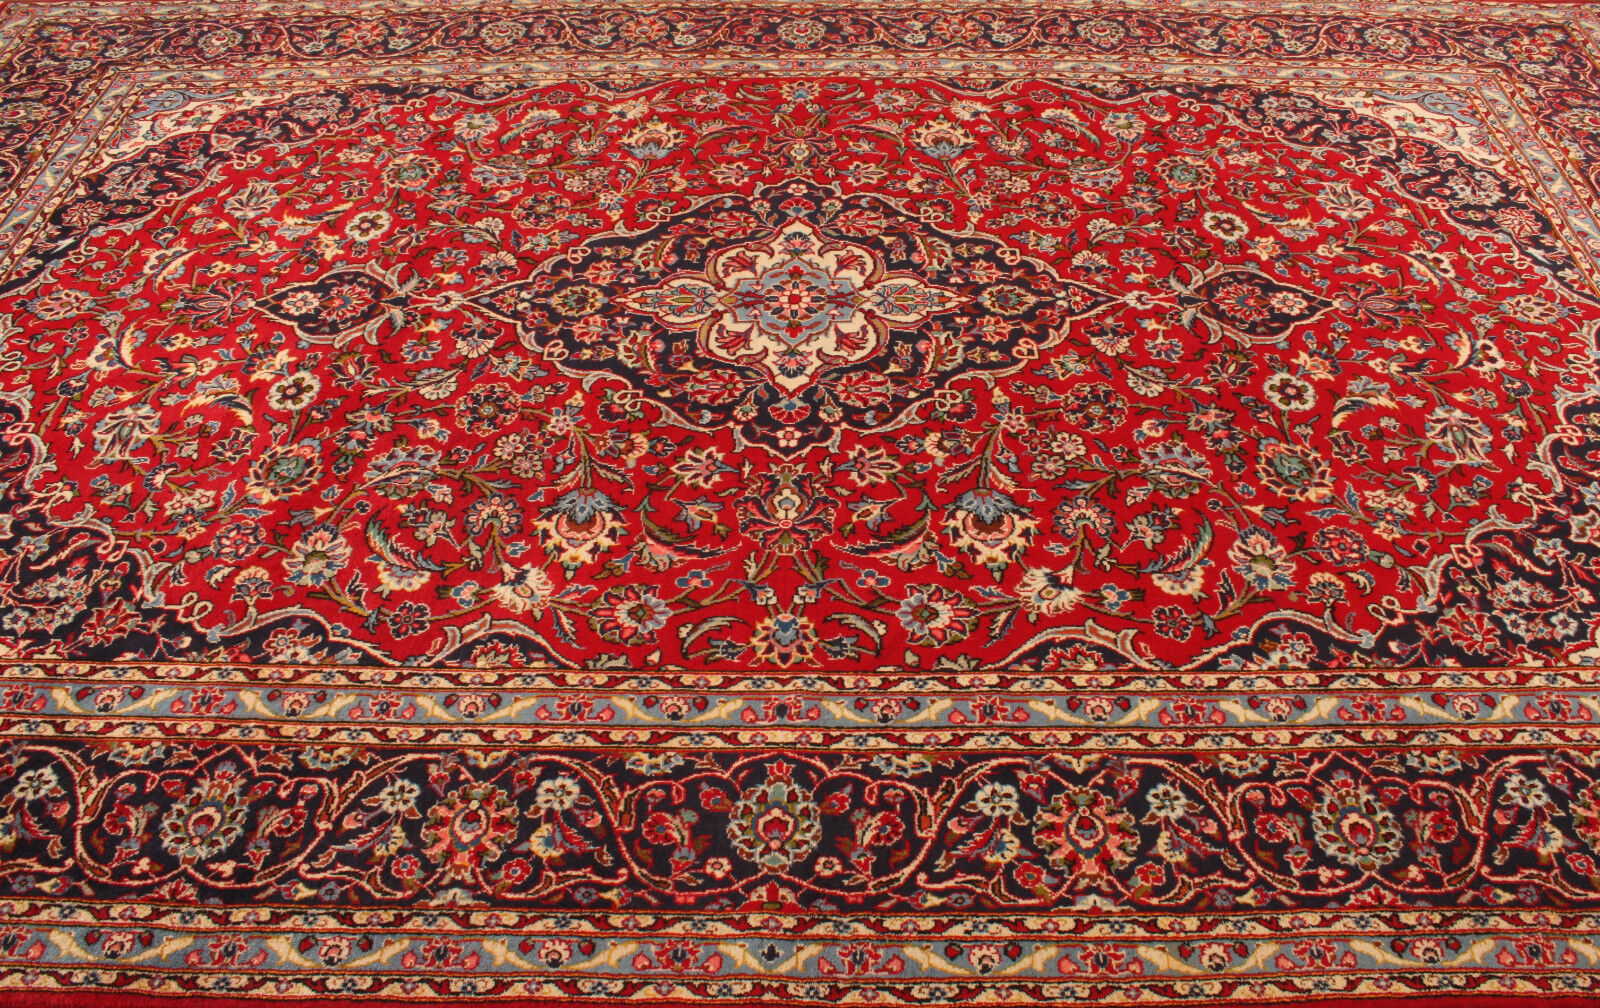  Back view of the Handmade Vintage Persian Style Kashan Rug showcasing craftsmanship